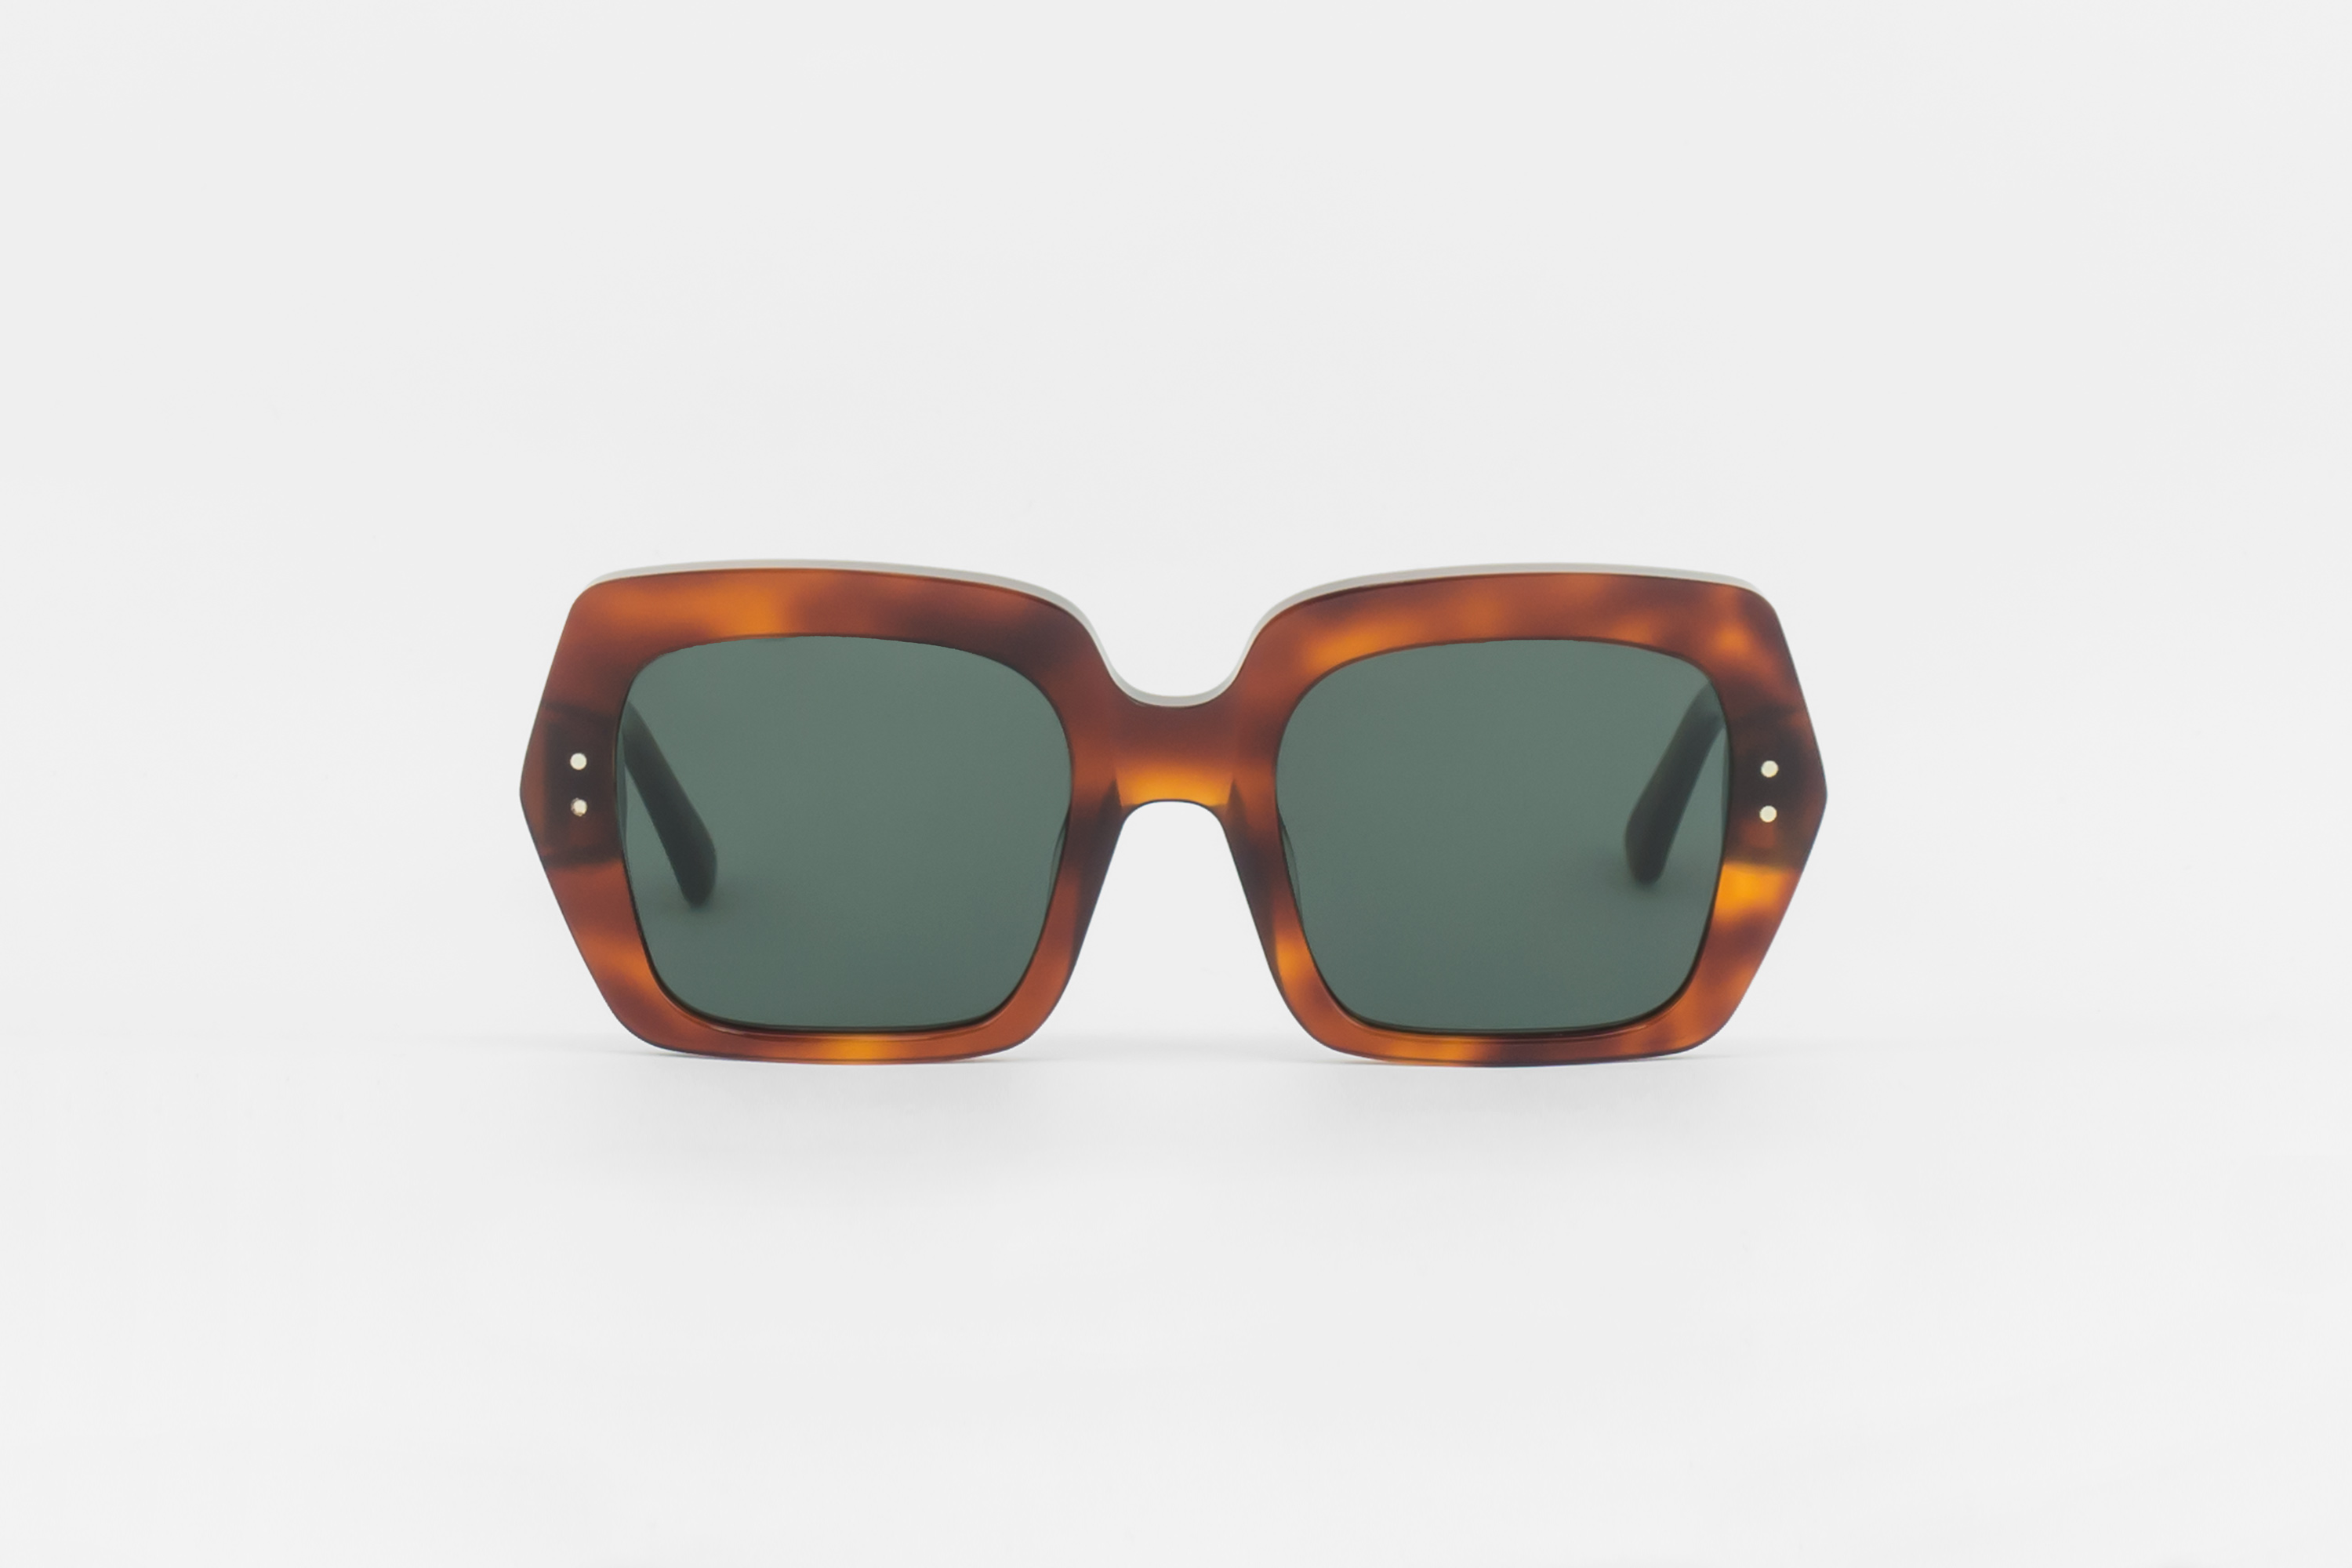 Monokel Eyewear Kaia Amber / Green Solid Lens Sunglasses